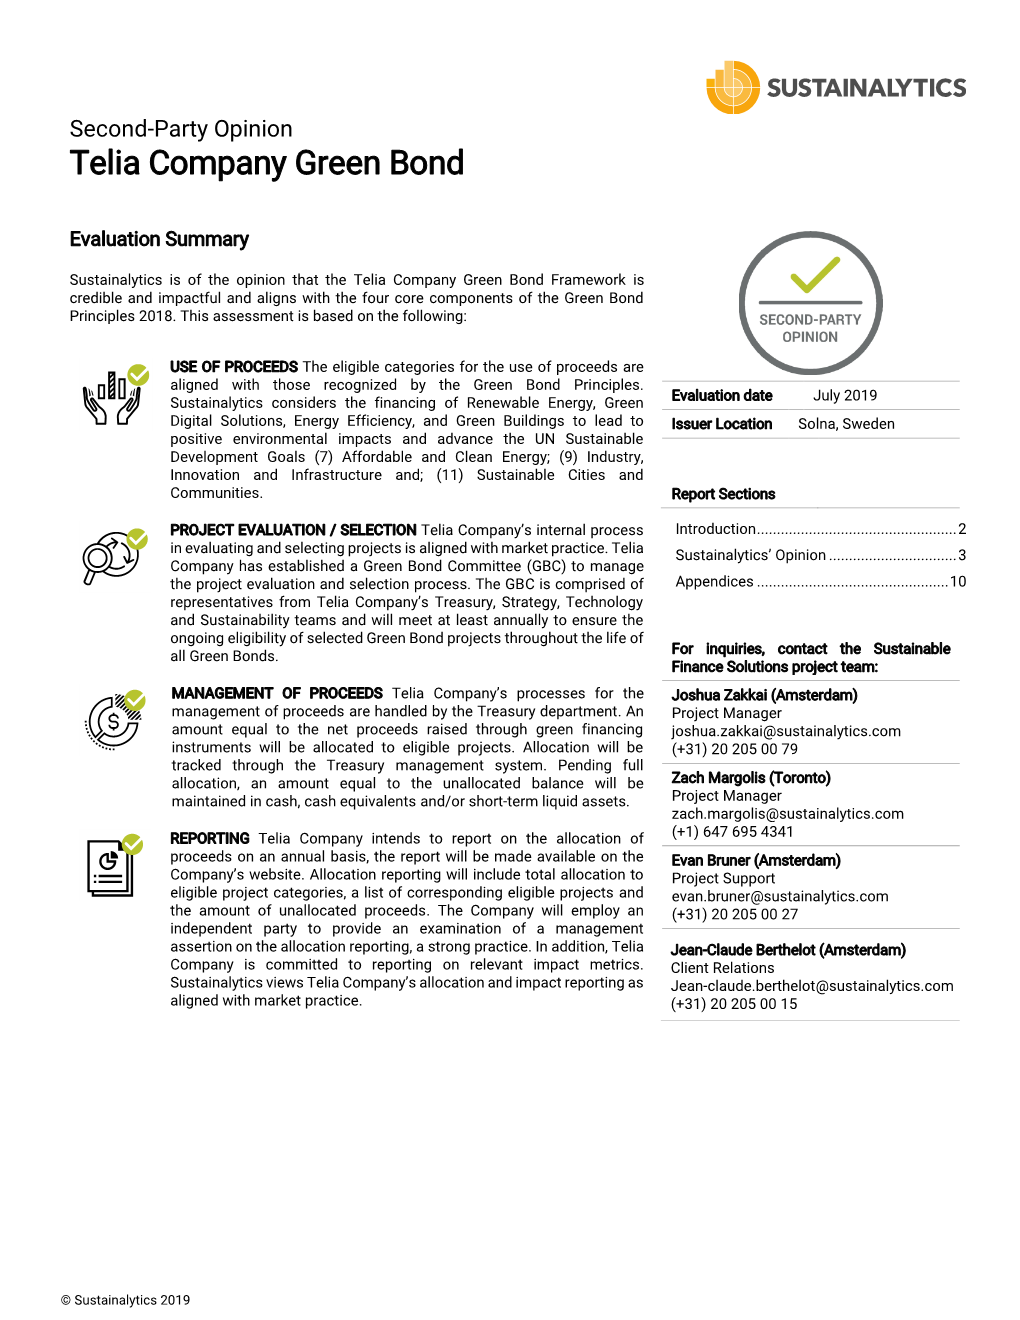 Telia Company Green Bond